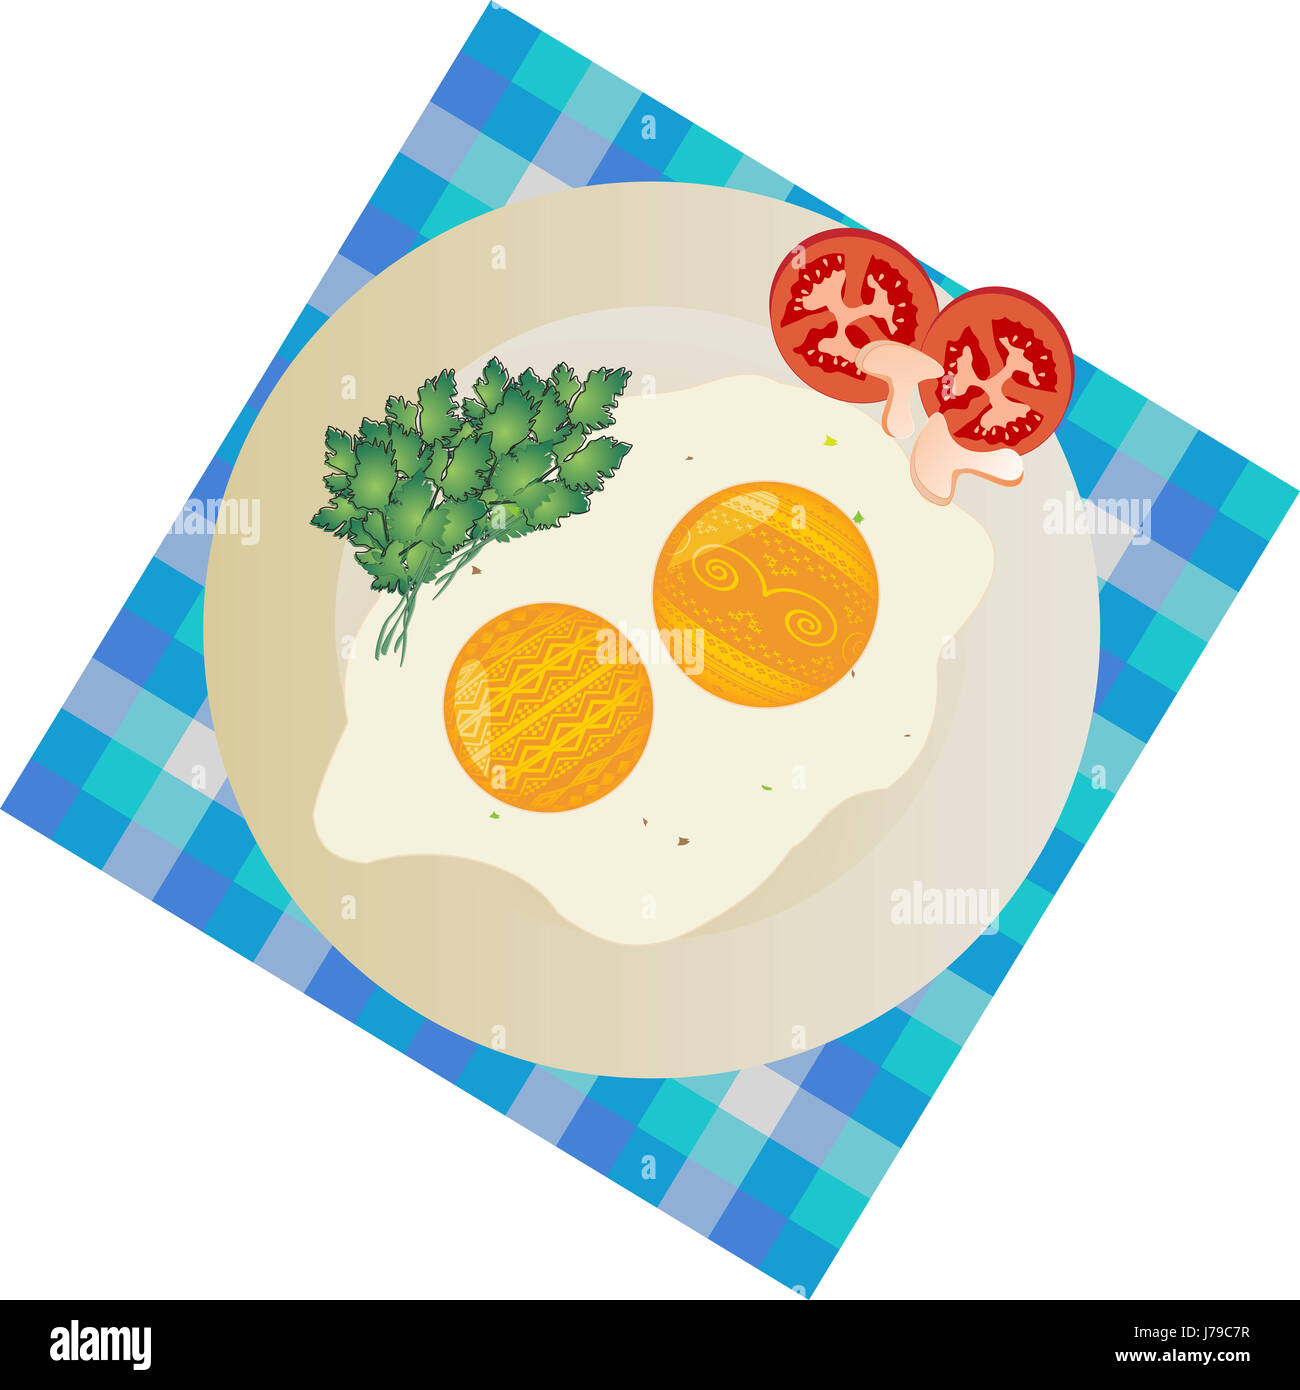 art easter illustration egg artistic backdrop background design art graphic Stock Photo